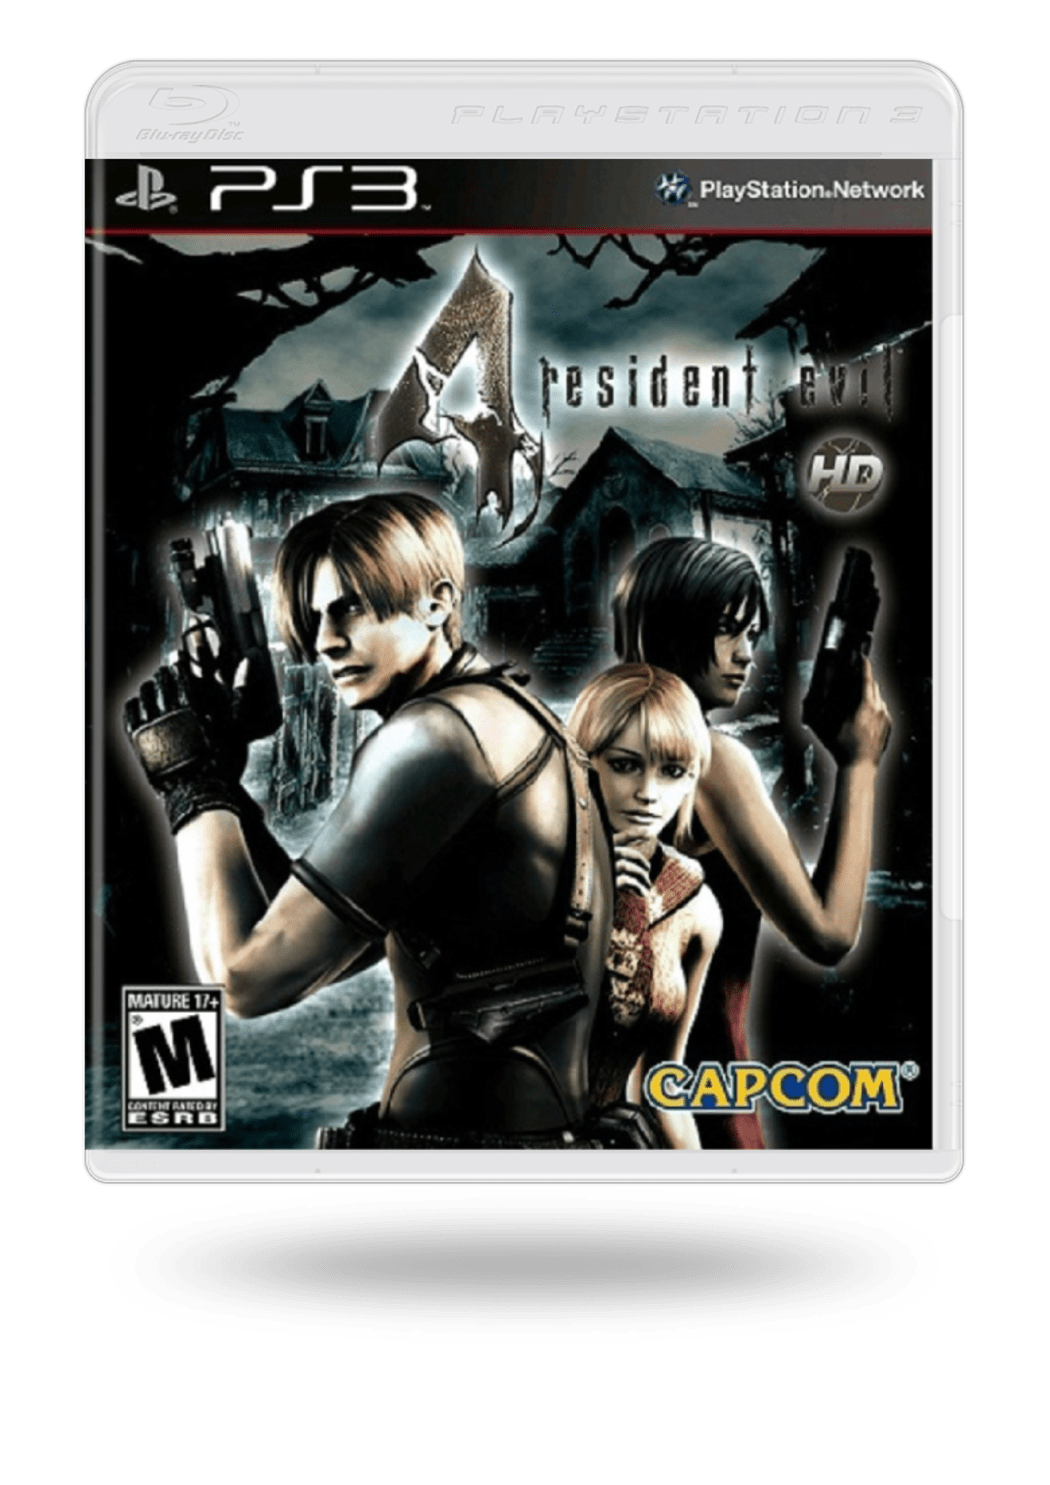 Resident evil 3 ps5. PLAYSTATION 4 Resident Evil 3. Resident Evil 4 PLAYSTATION 1. Resident Evil 8 ps3.